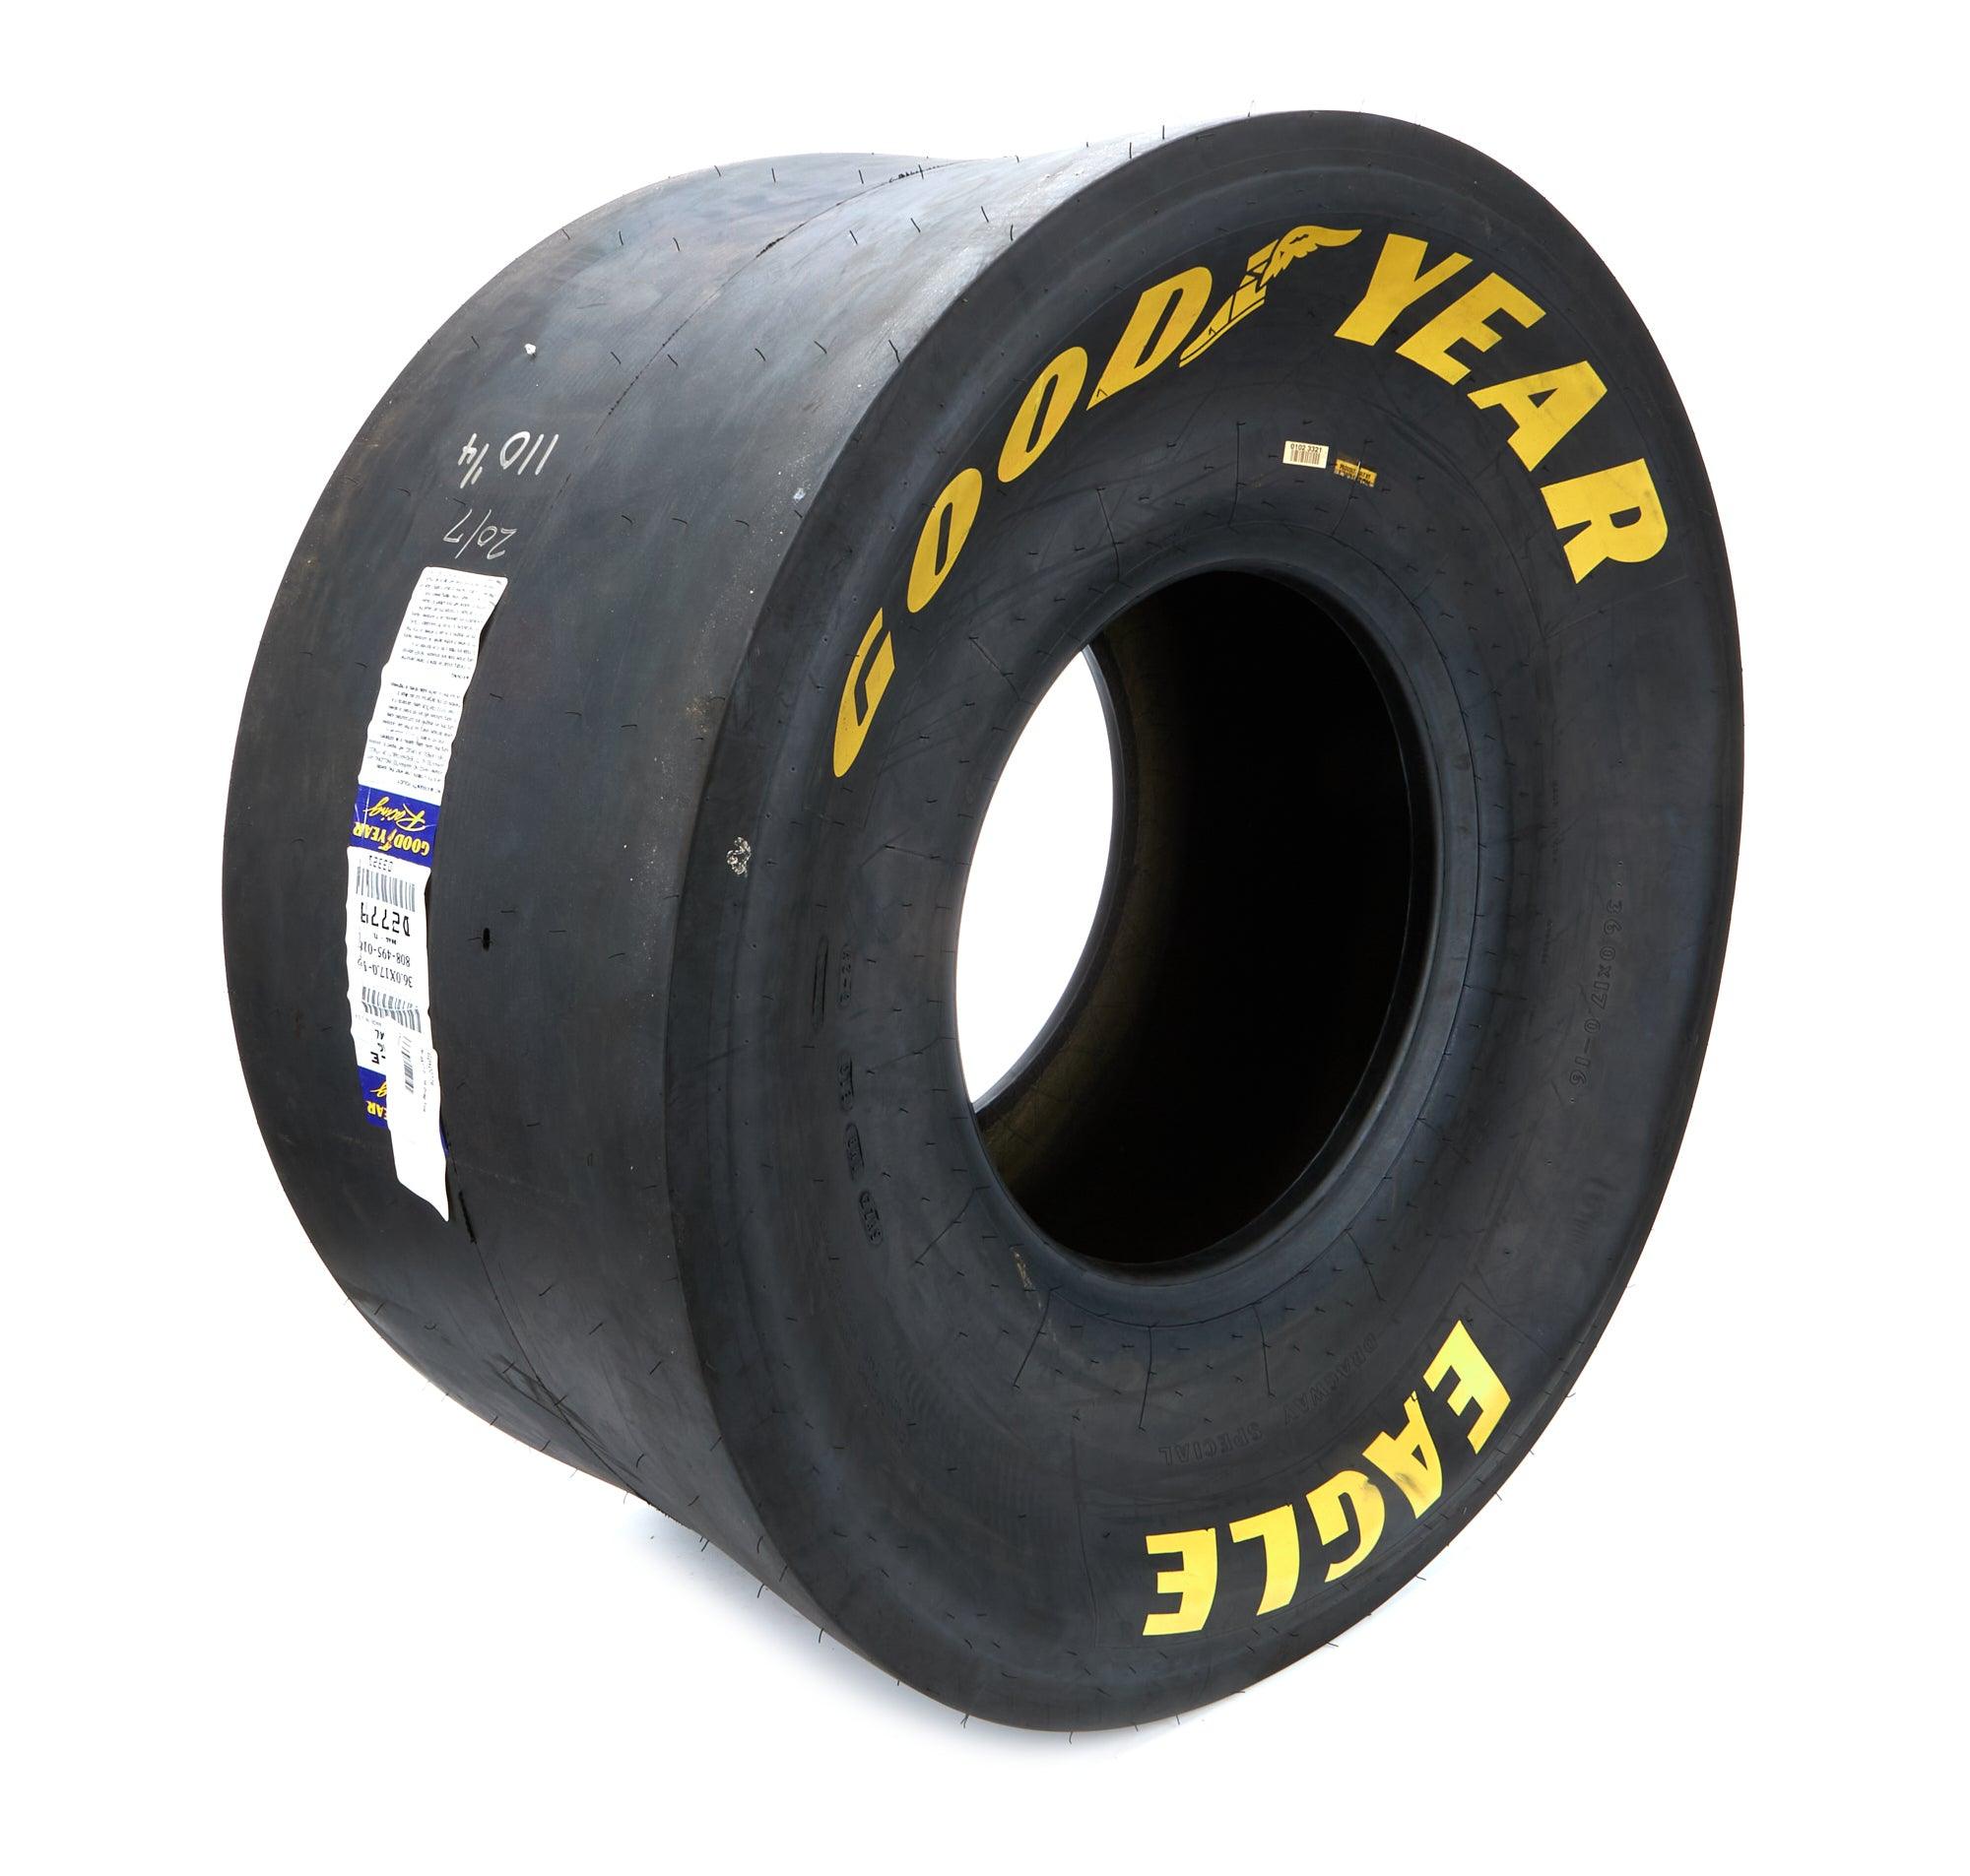 36.0X17.0-16 Drag Tire - Burlile Performance Products